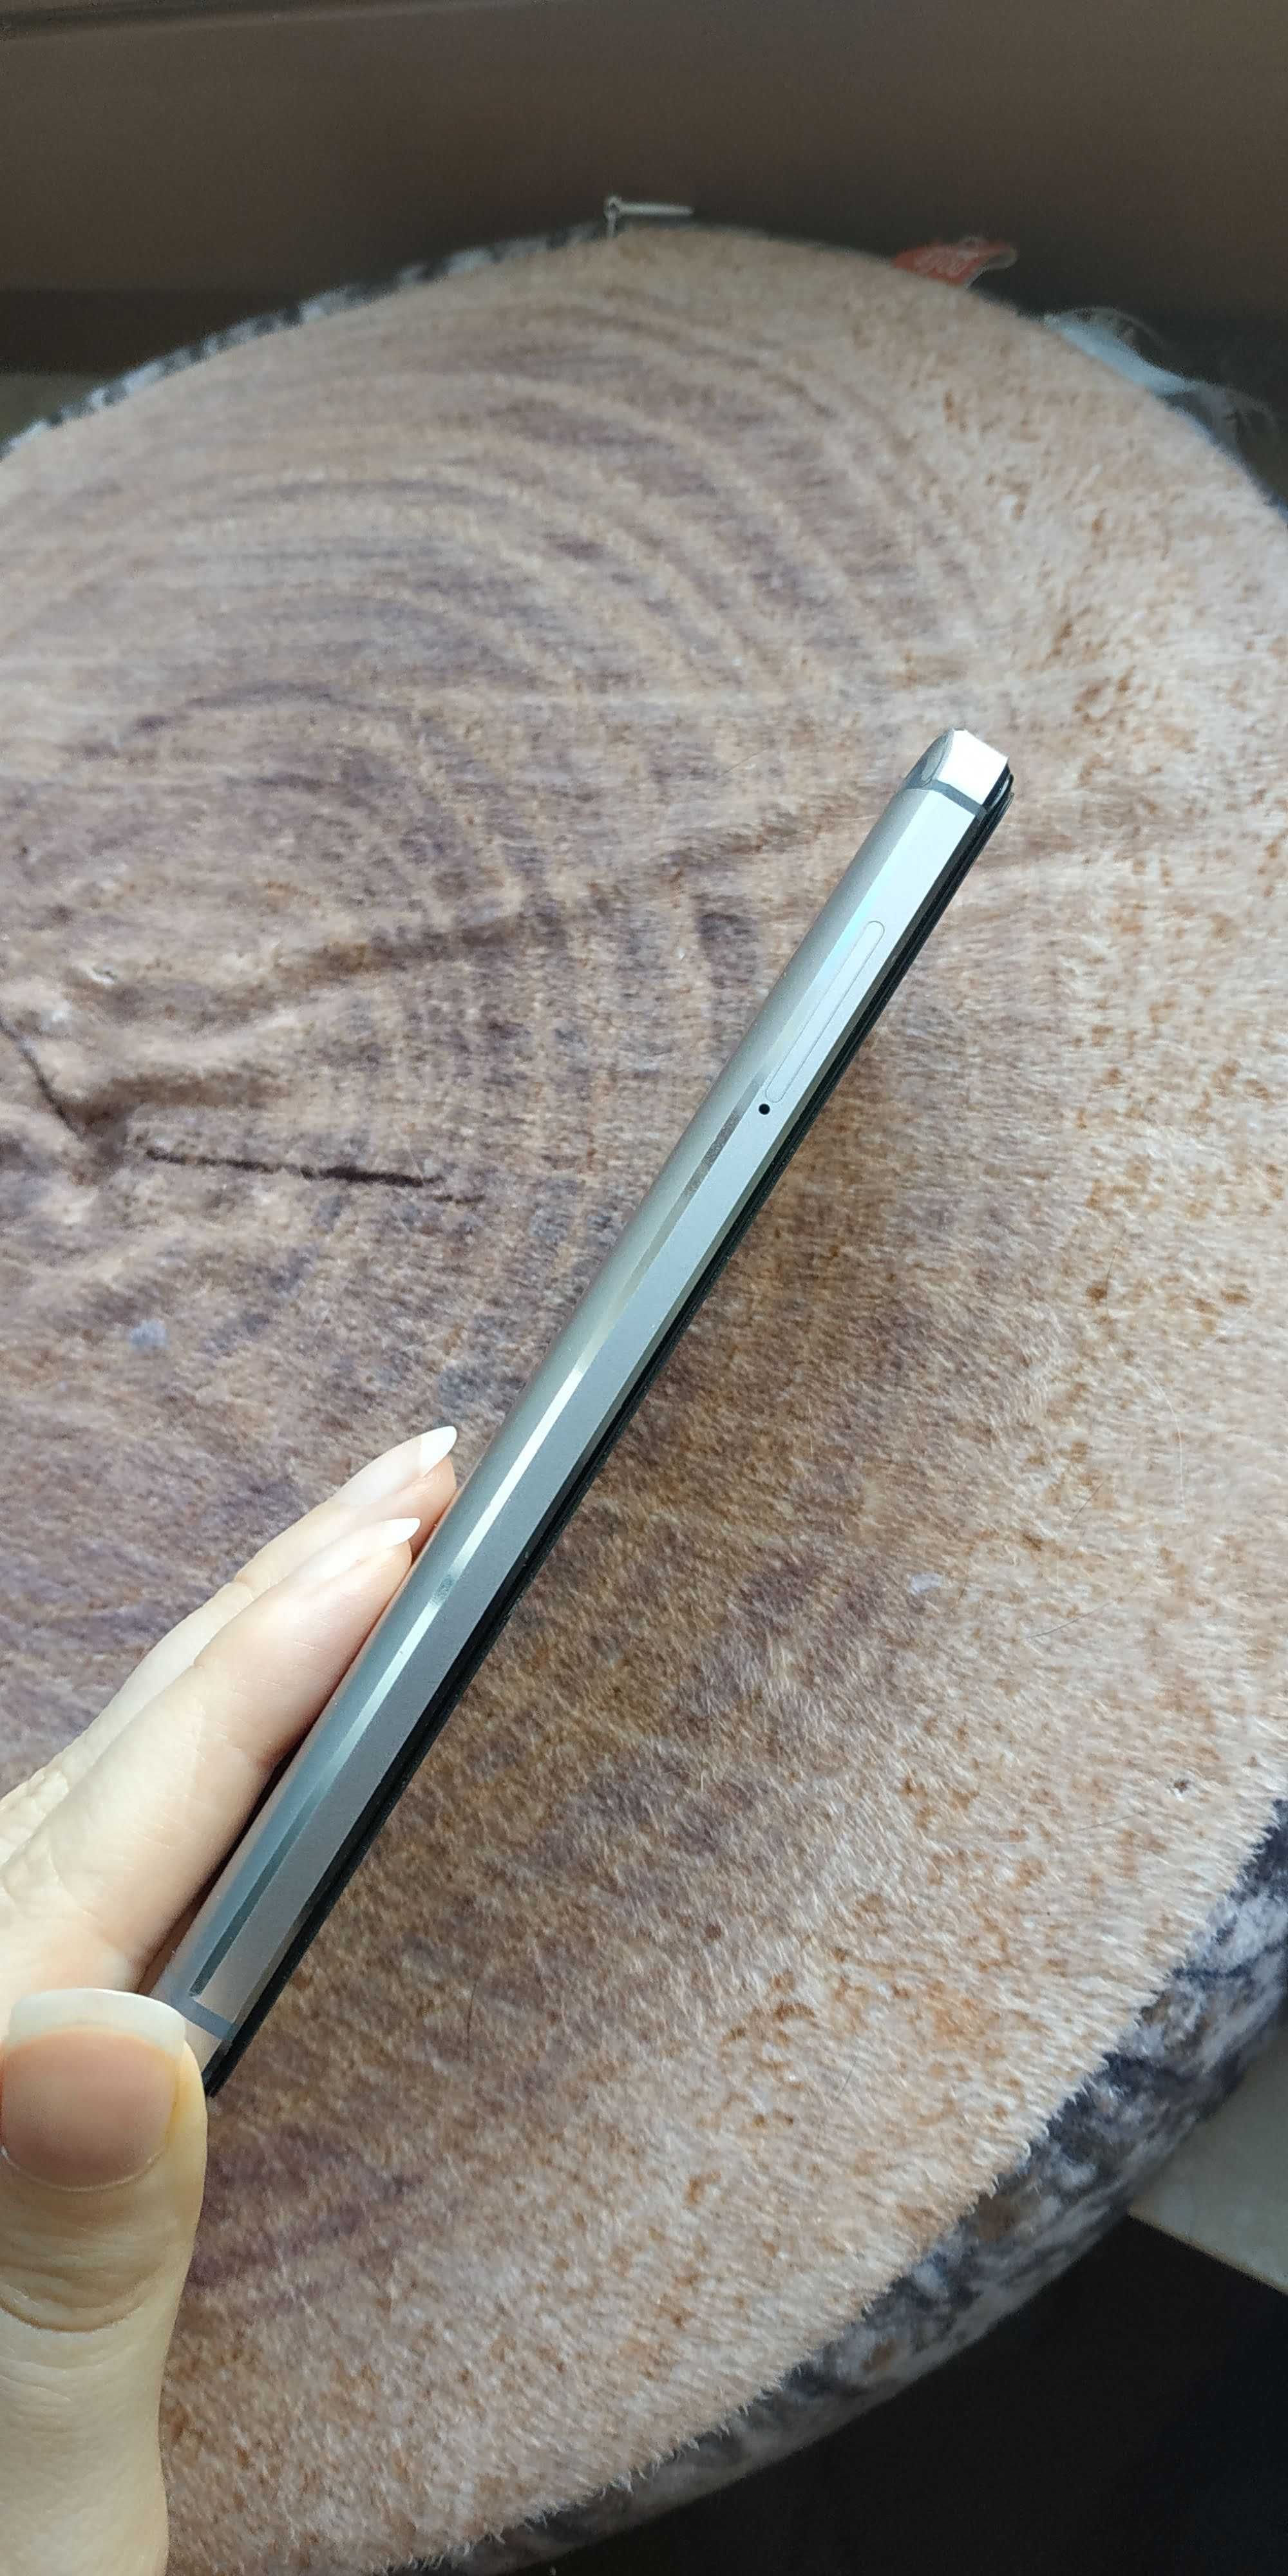 Xiaomi Redmi 4 Pro/Prime 32GB - czarny/srebrny